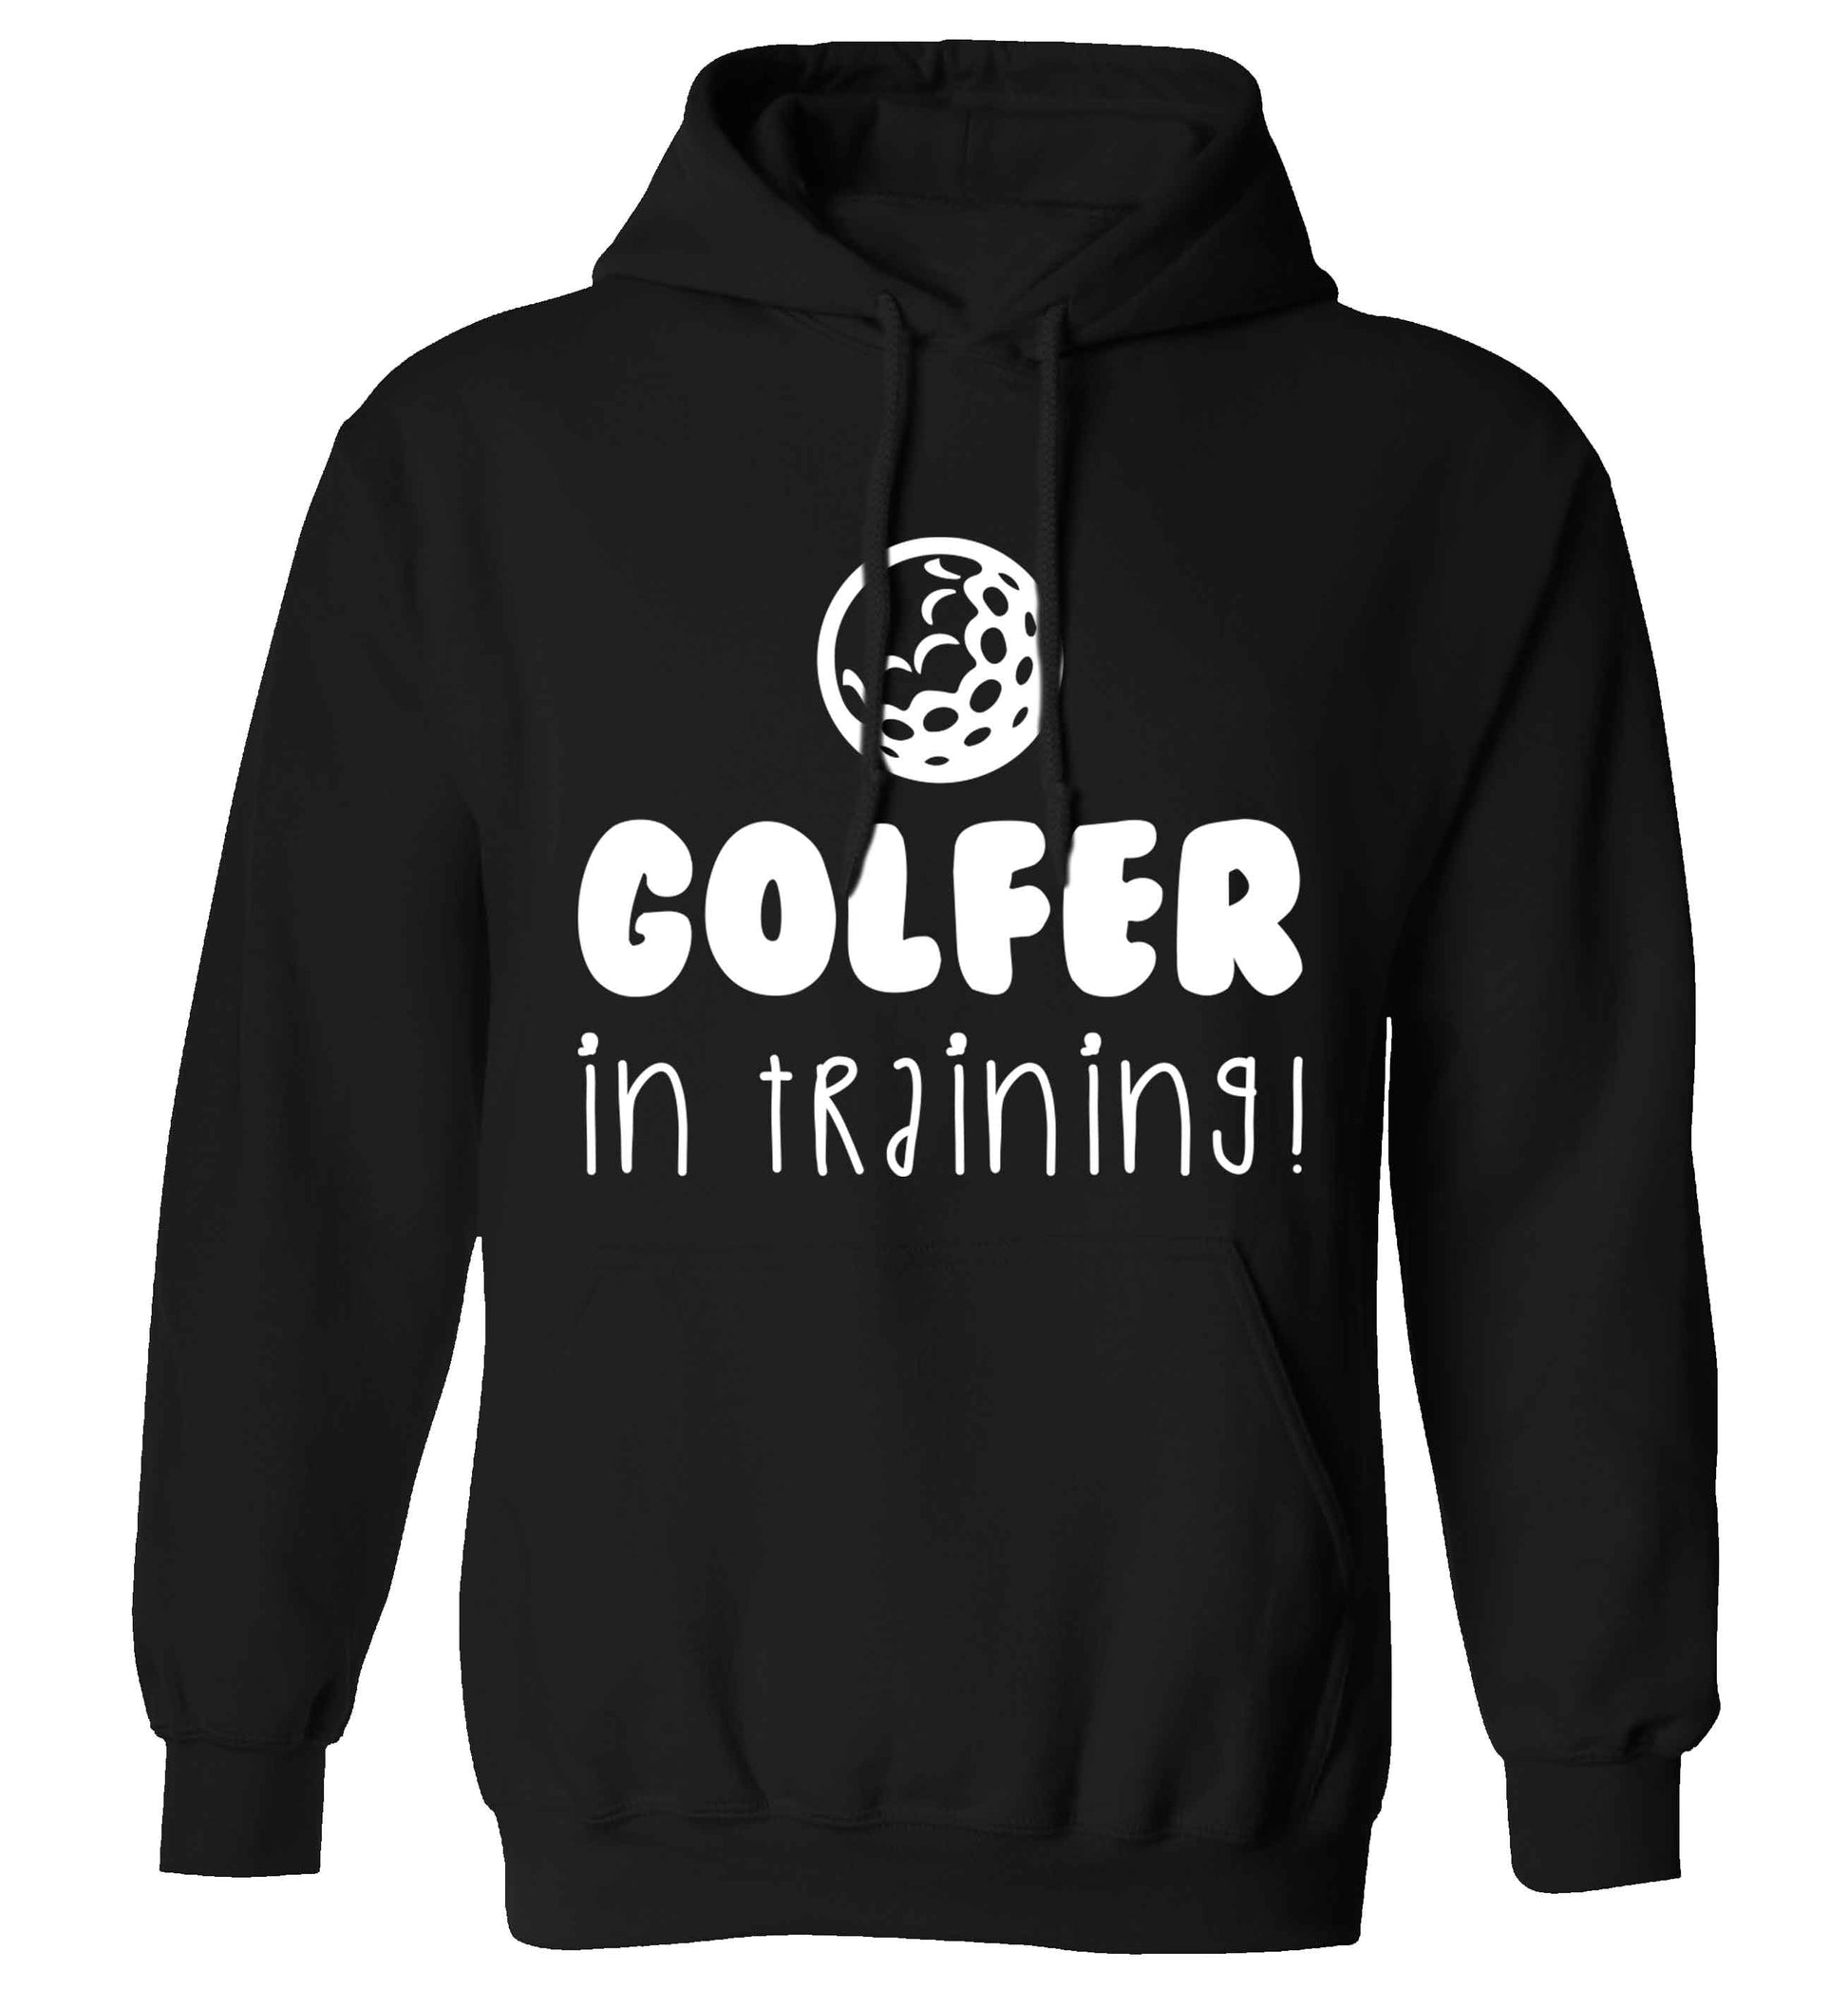 Golfer in training adults unisex black hoodie 2XL